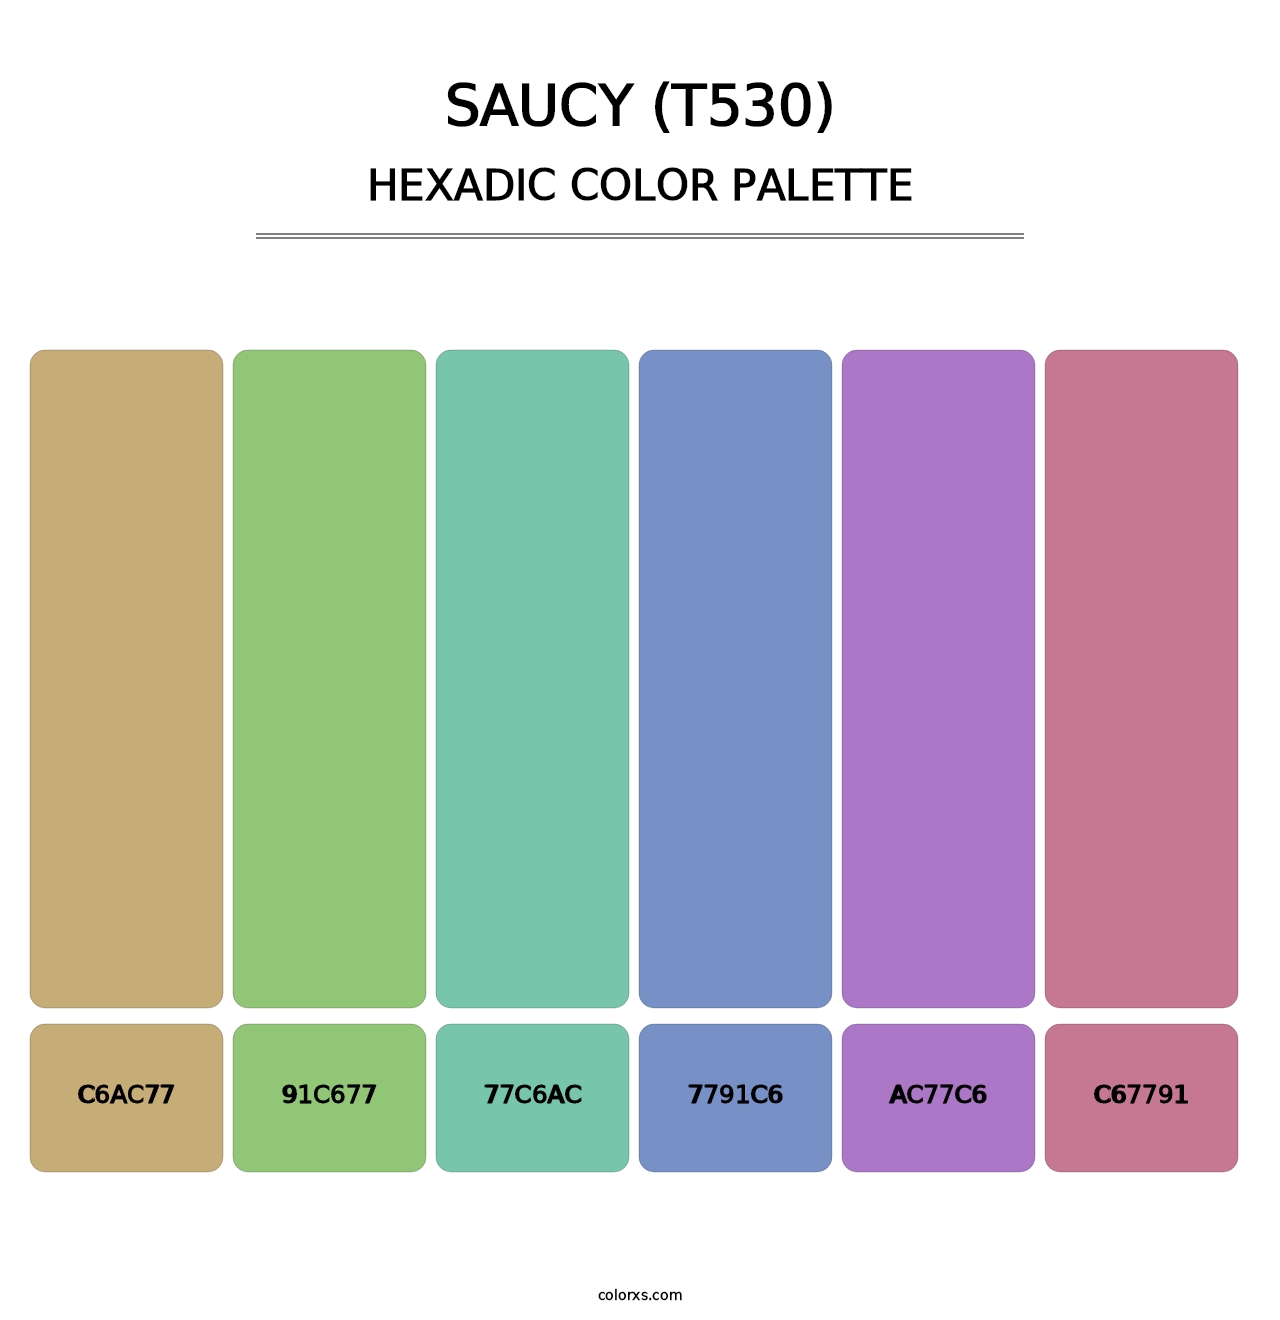 Saucy (T530) - Hexadic Color Palette